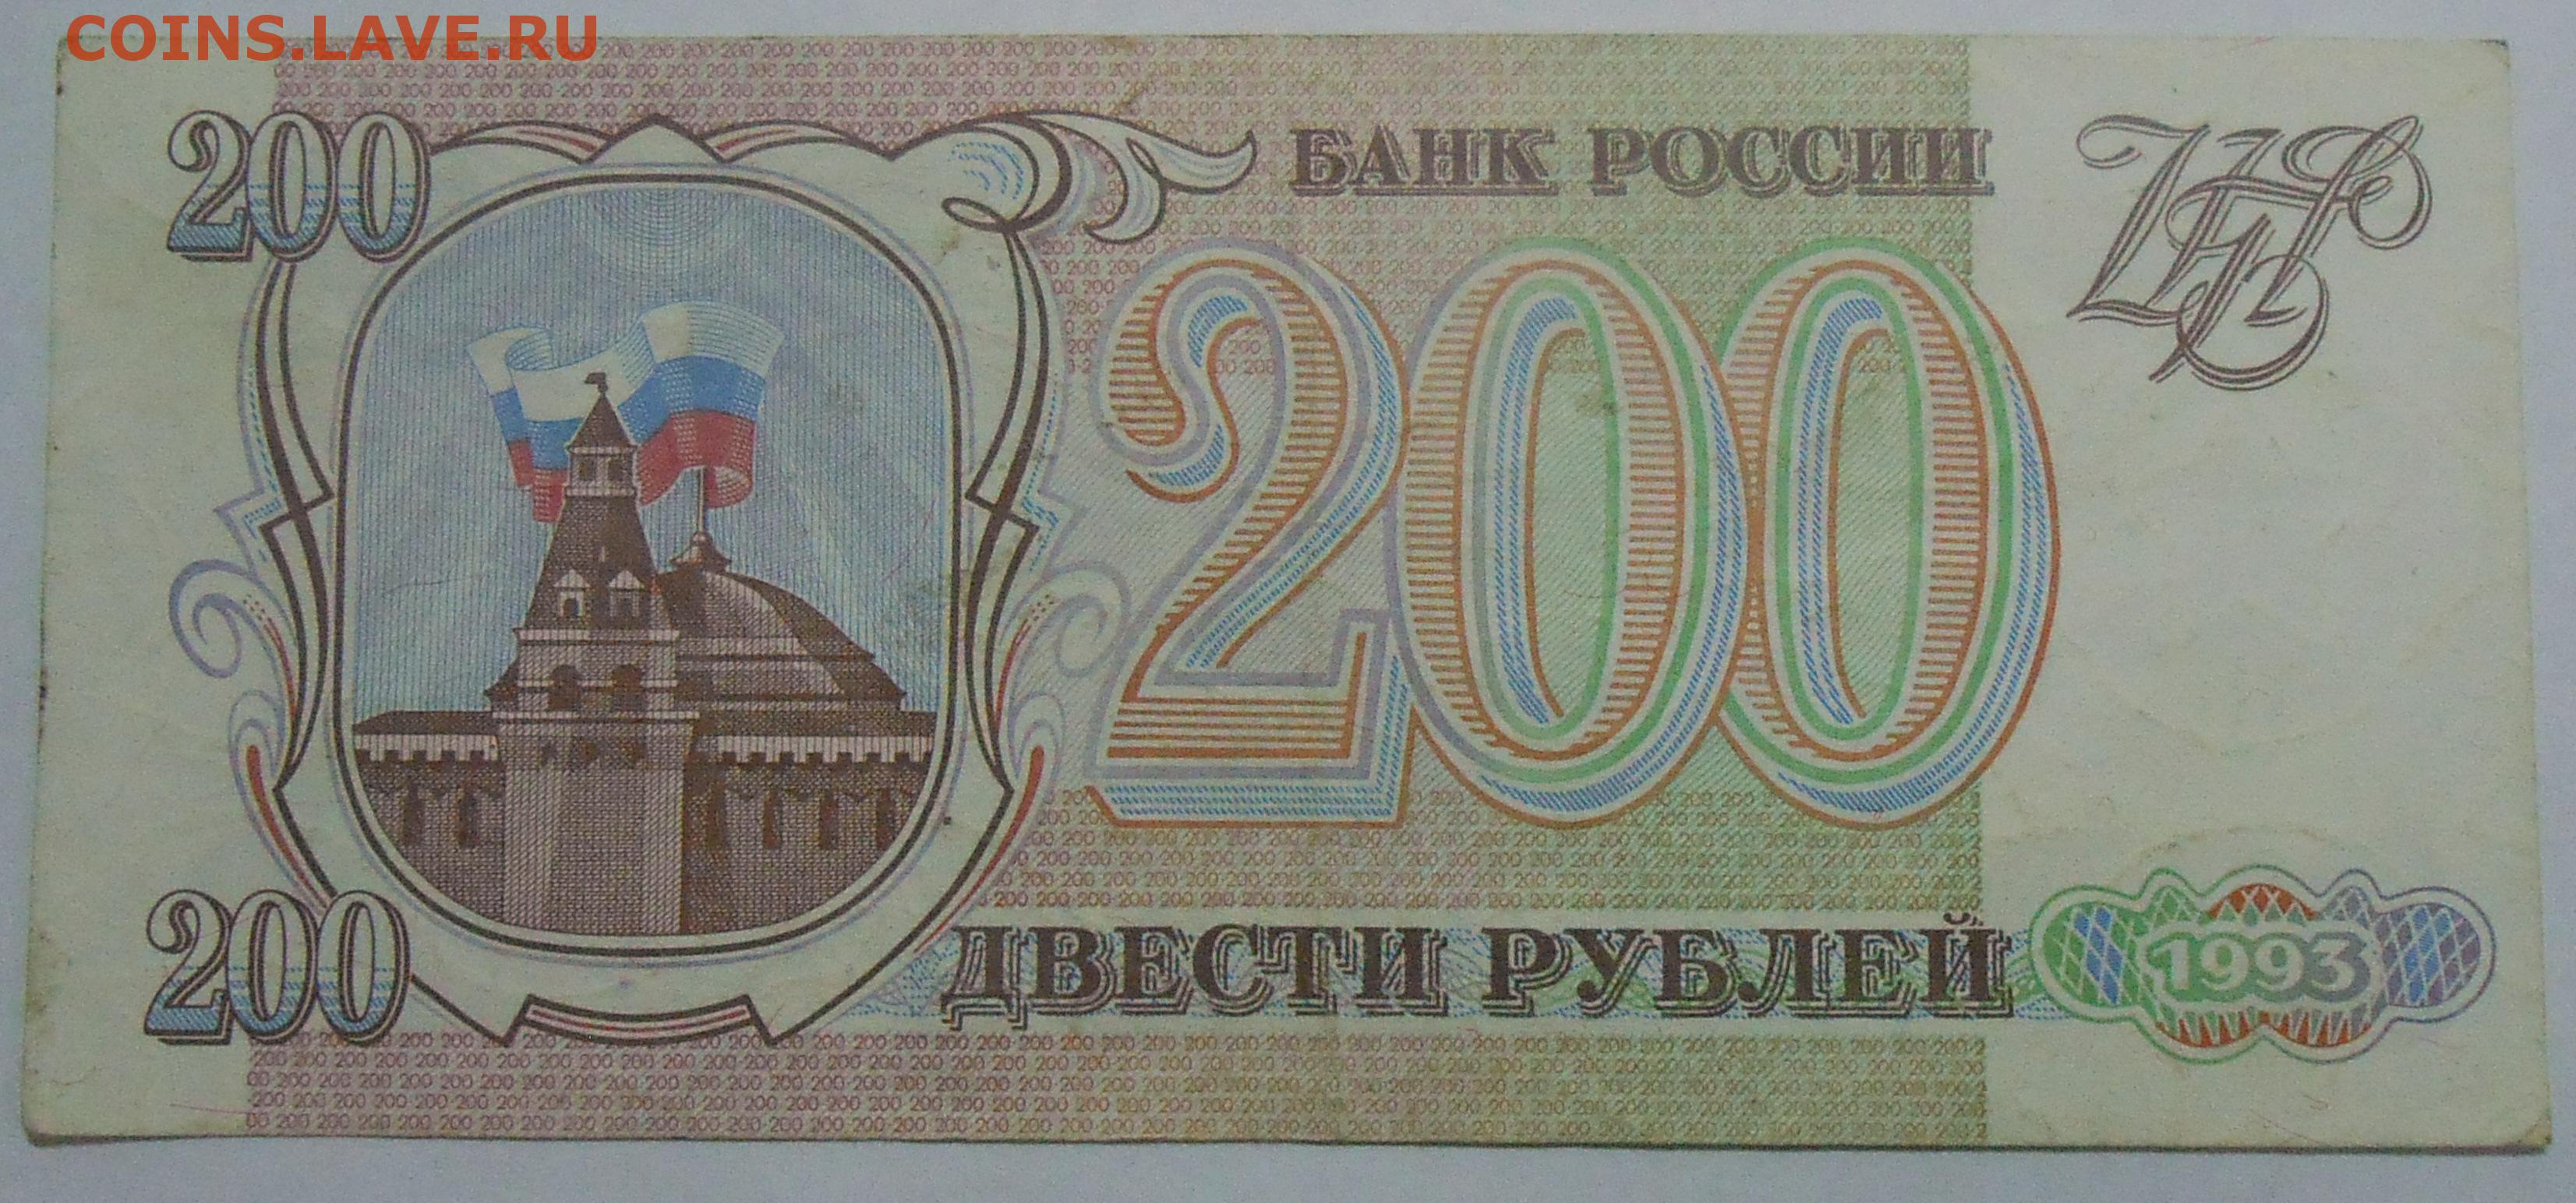 Двести девять рублей. Банкнота 200 рублей 1993 пресс. Банкнота 200 рублей 1993. 200 Рублей 1993 года. Купюра 200 рублей 1993 года.